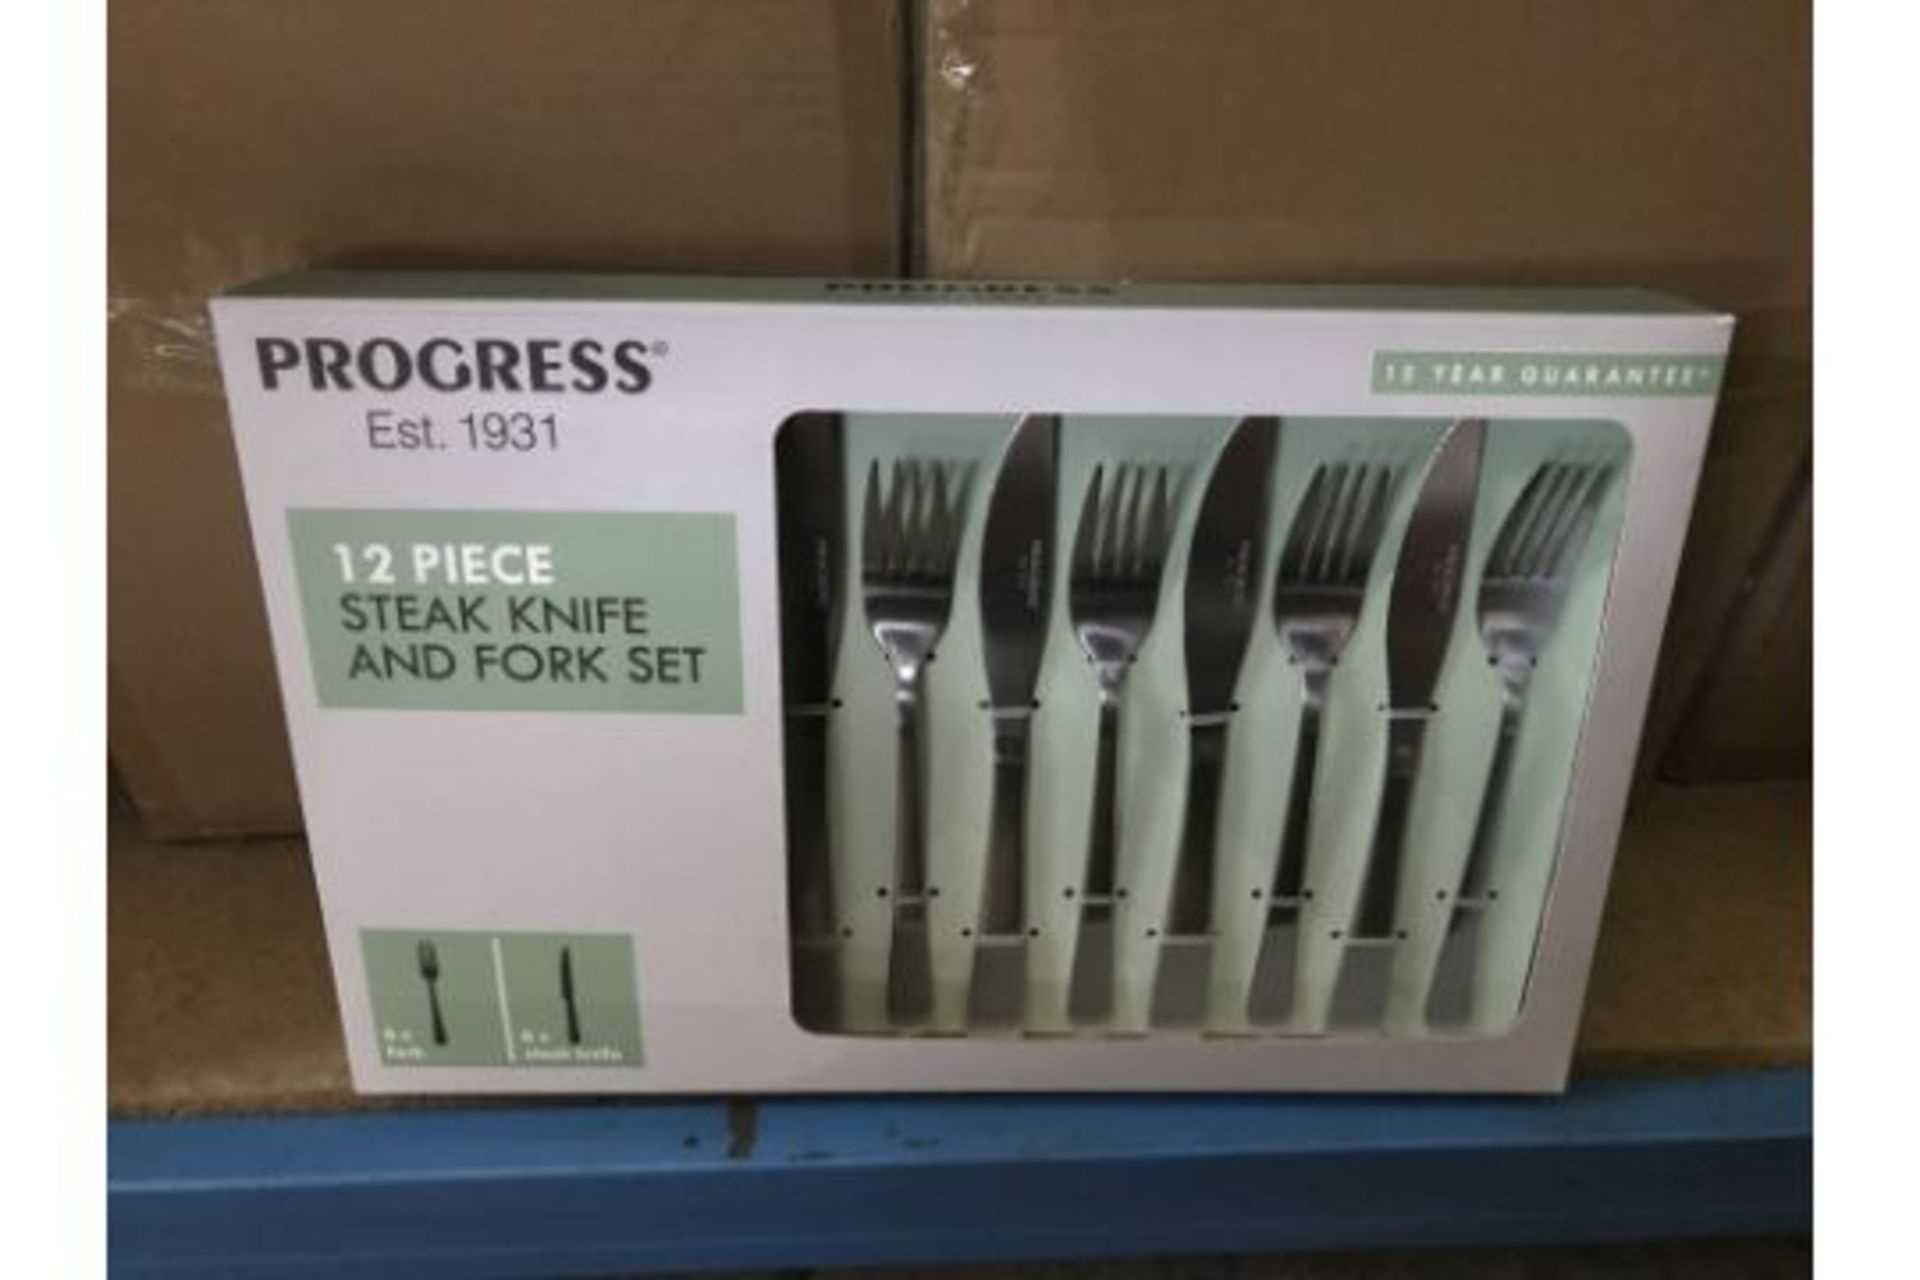 2 X PROGRESS 12 PIECE STEAK KNIFE AND FORK SETS